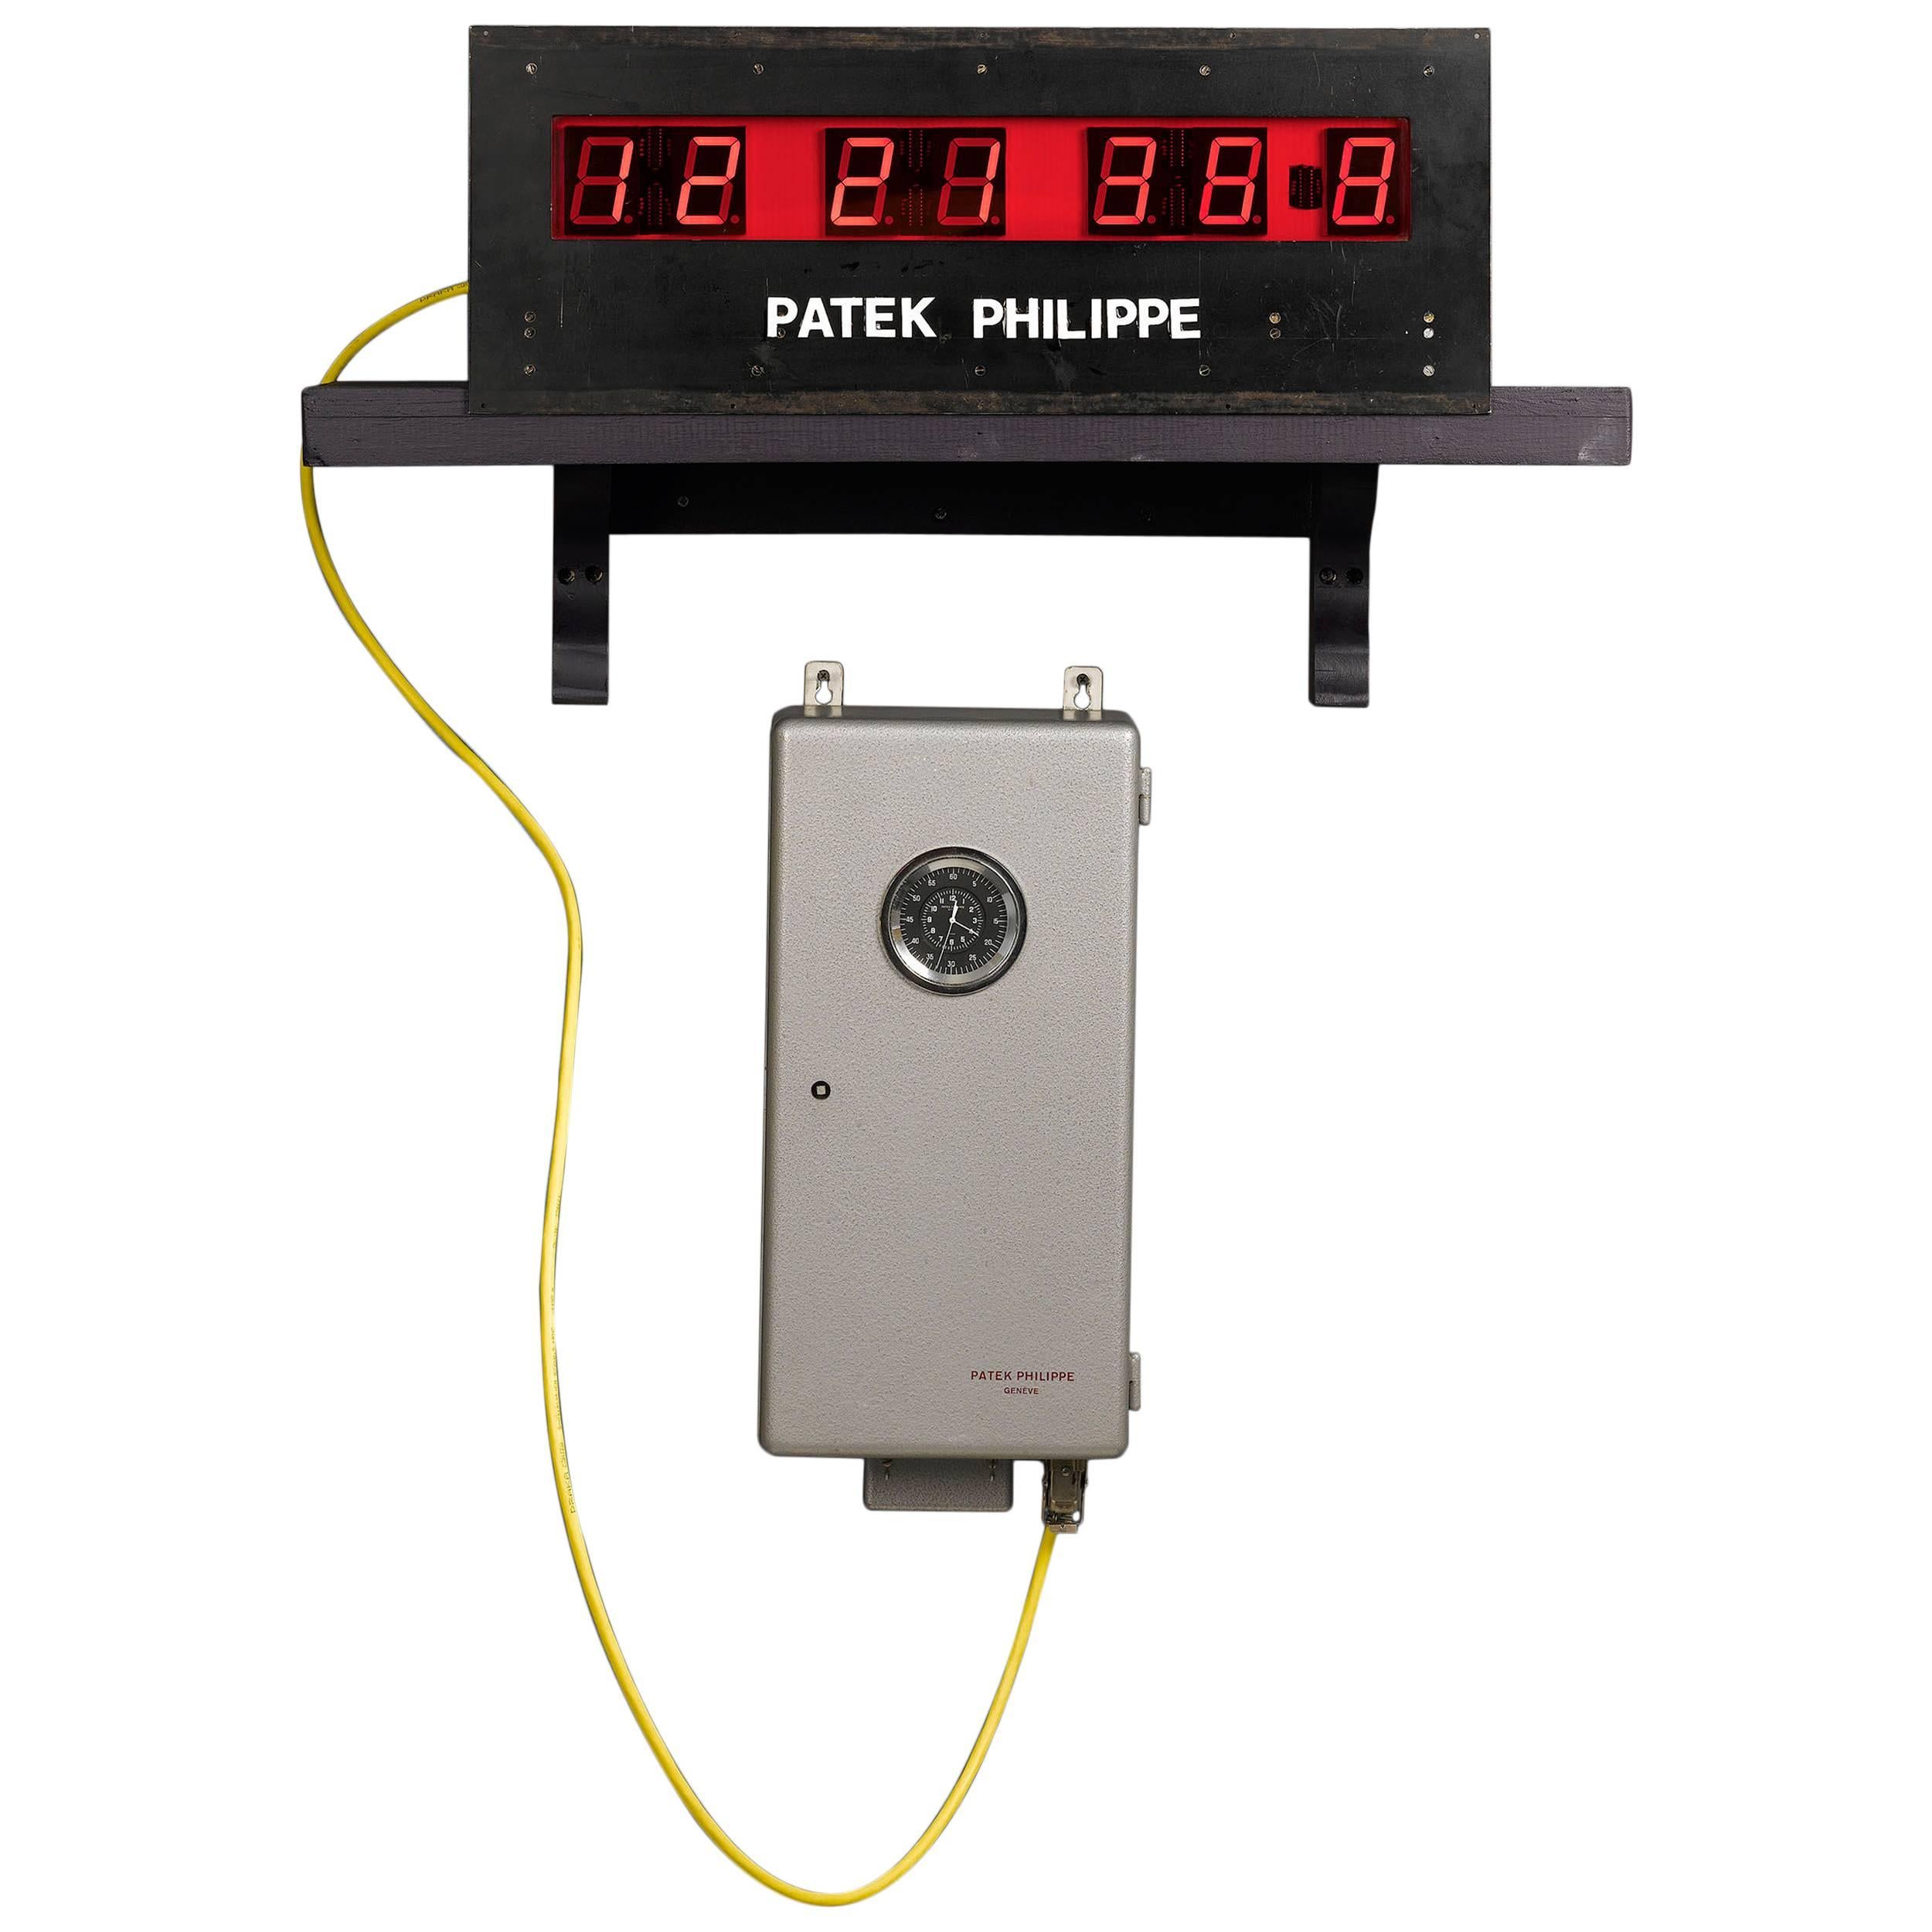 Patek Philippe Electronic Master Clock and Digital Display